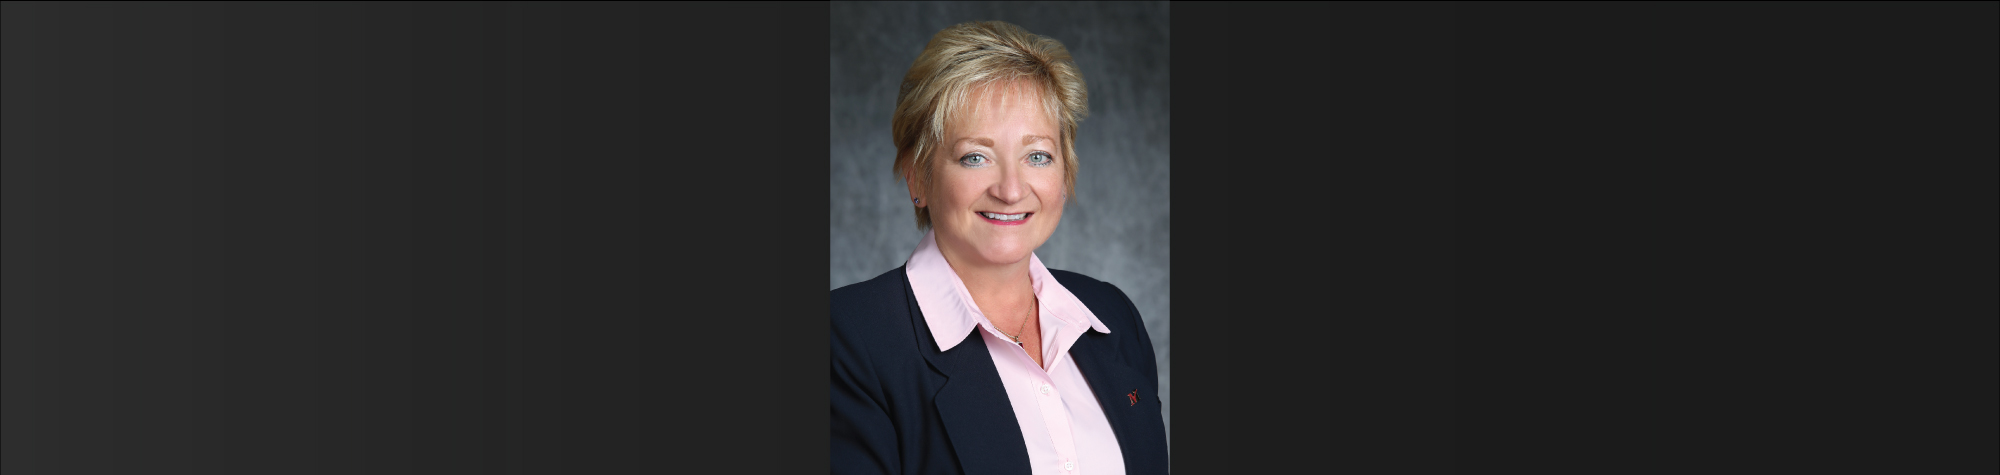 Merchants Insurance Group Promotes Christine Schmitt to Executive Vice President & CFO